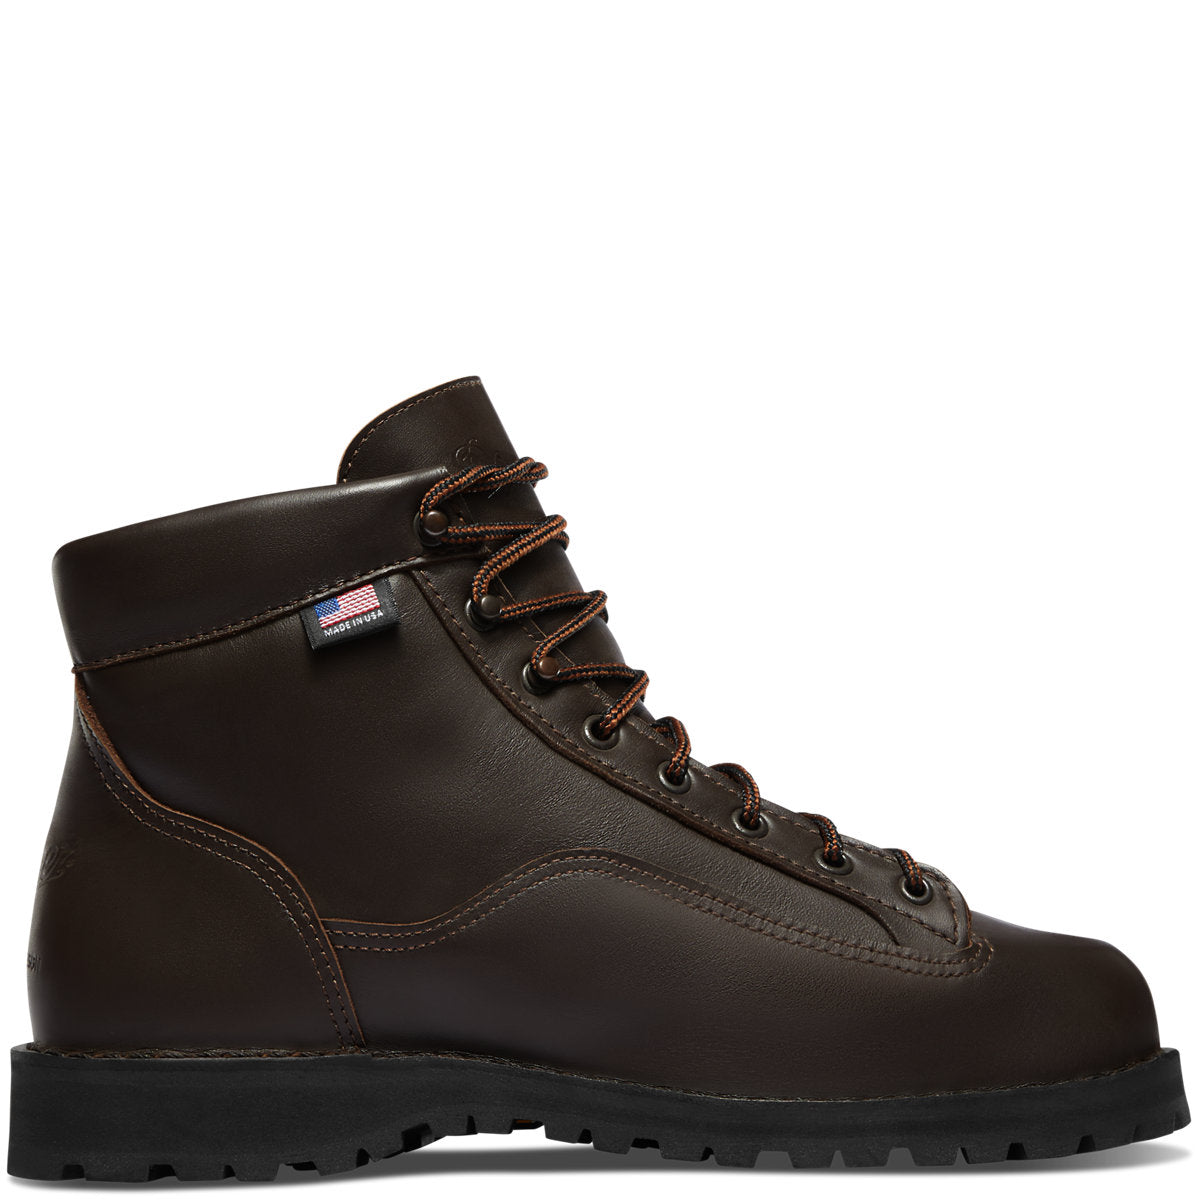 DANNER Men's Explorer - All-Leather Brown Boot